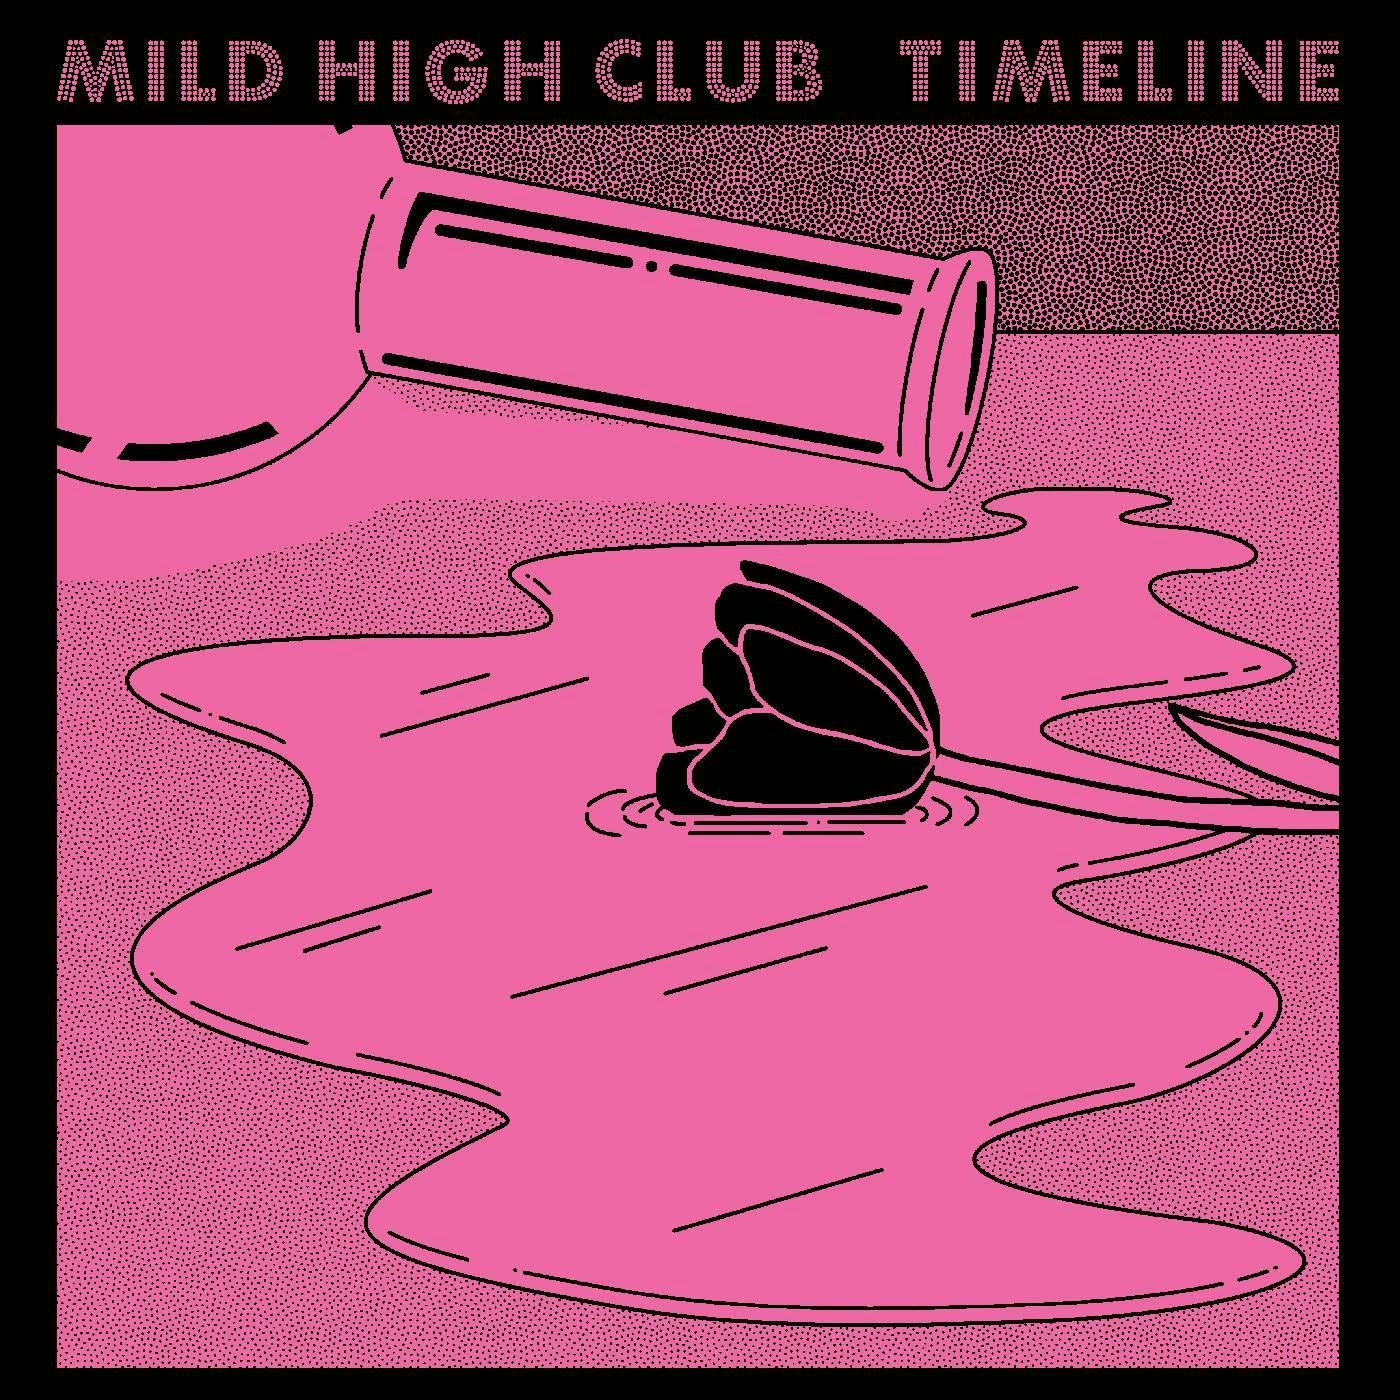 Mild High Club Skiptracing Vinyl Record